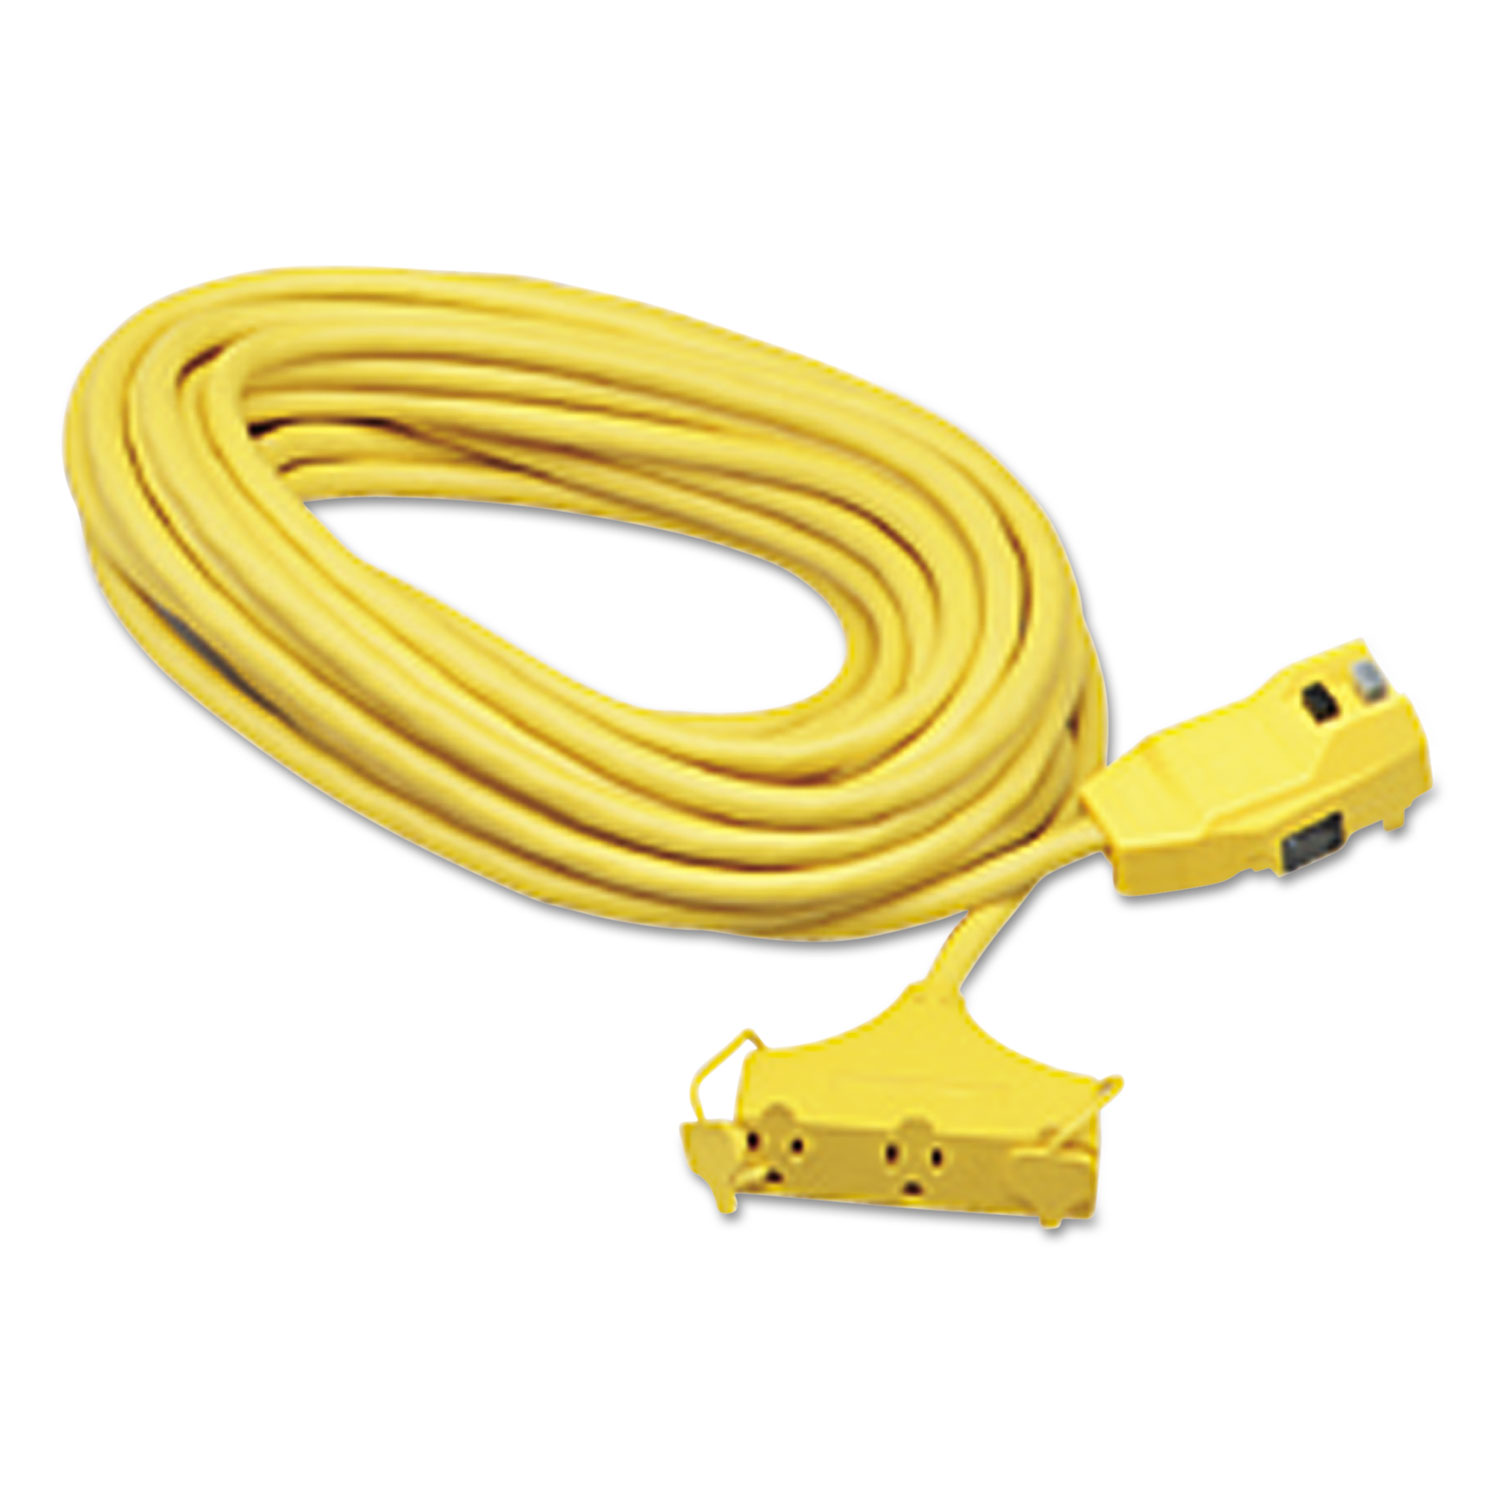 Ground Fault Circuit Interrupter Cord Set, 25 Feet, Yellow